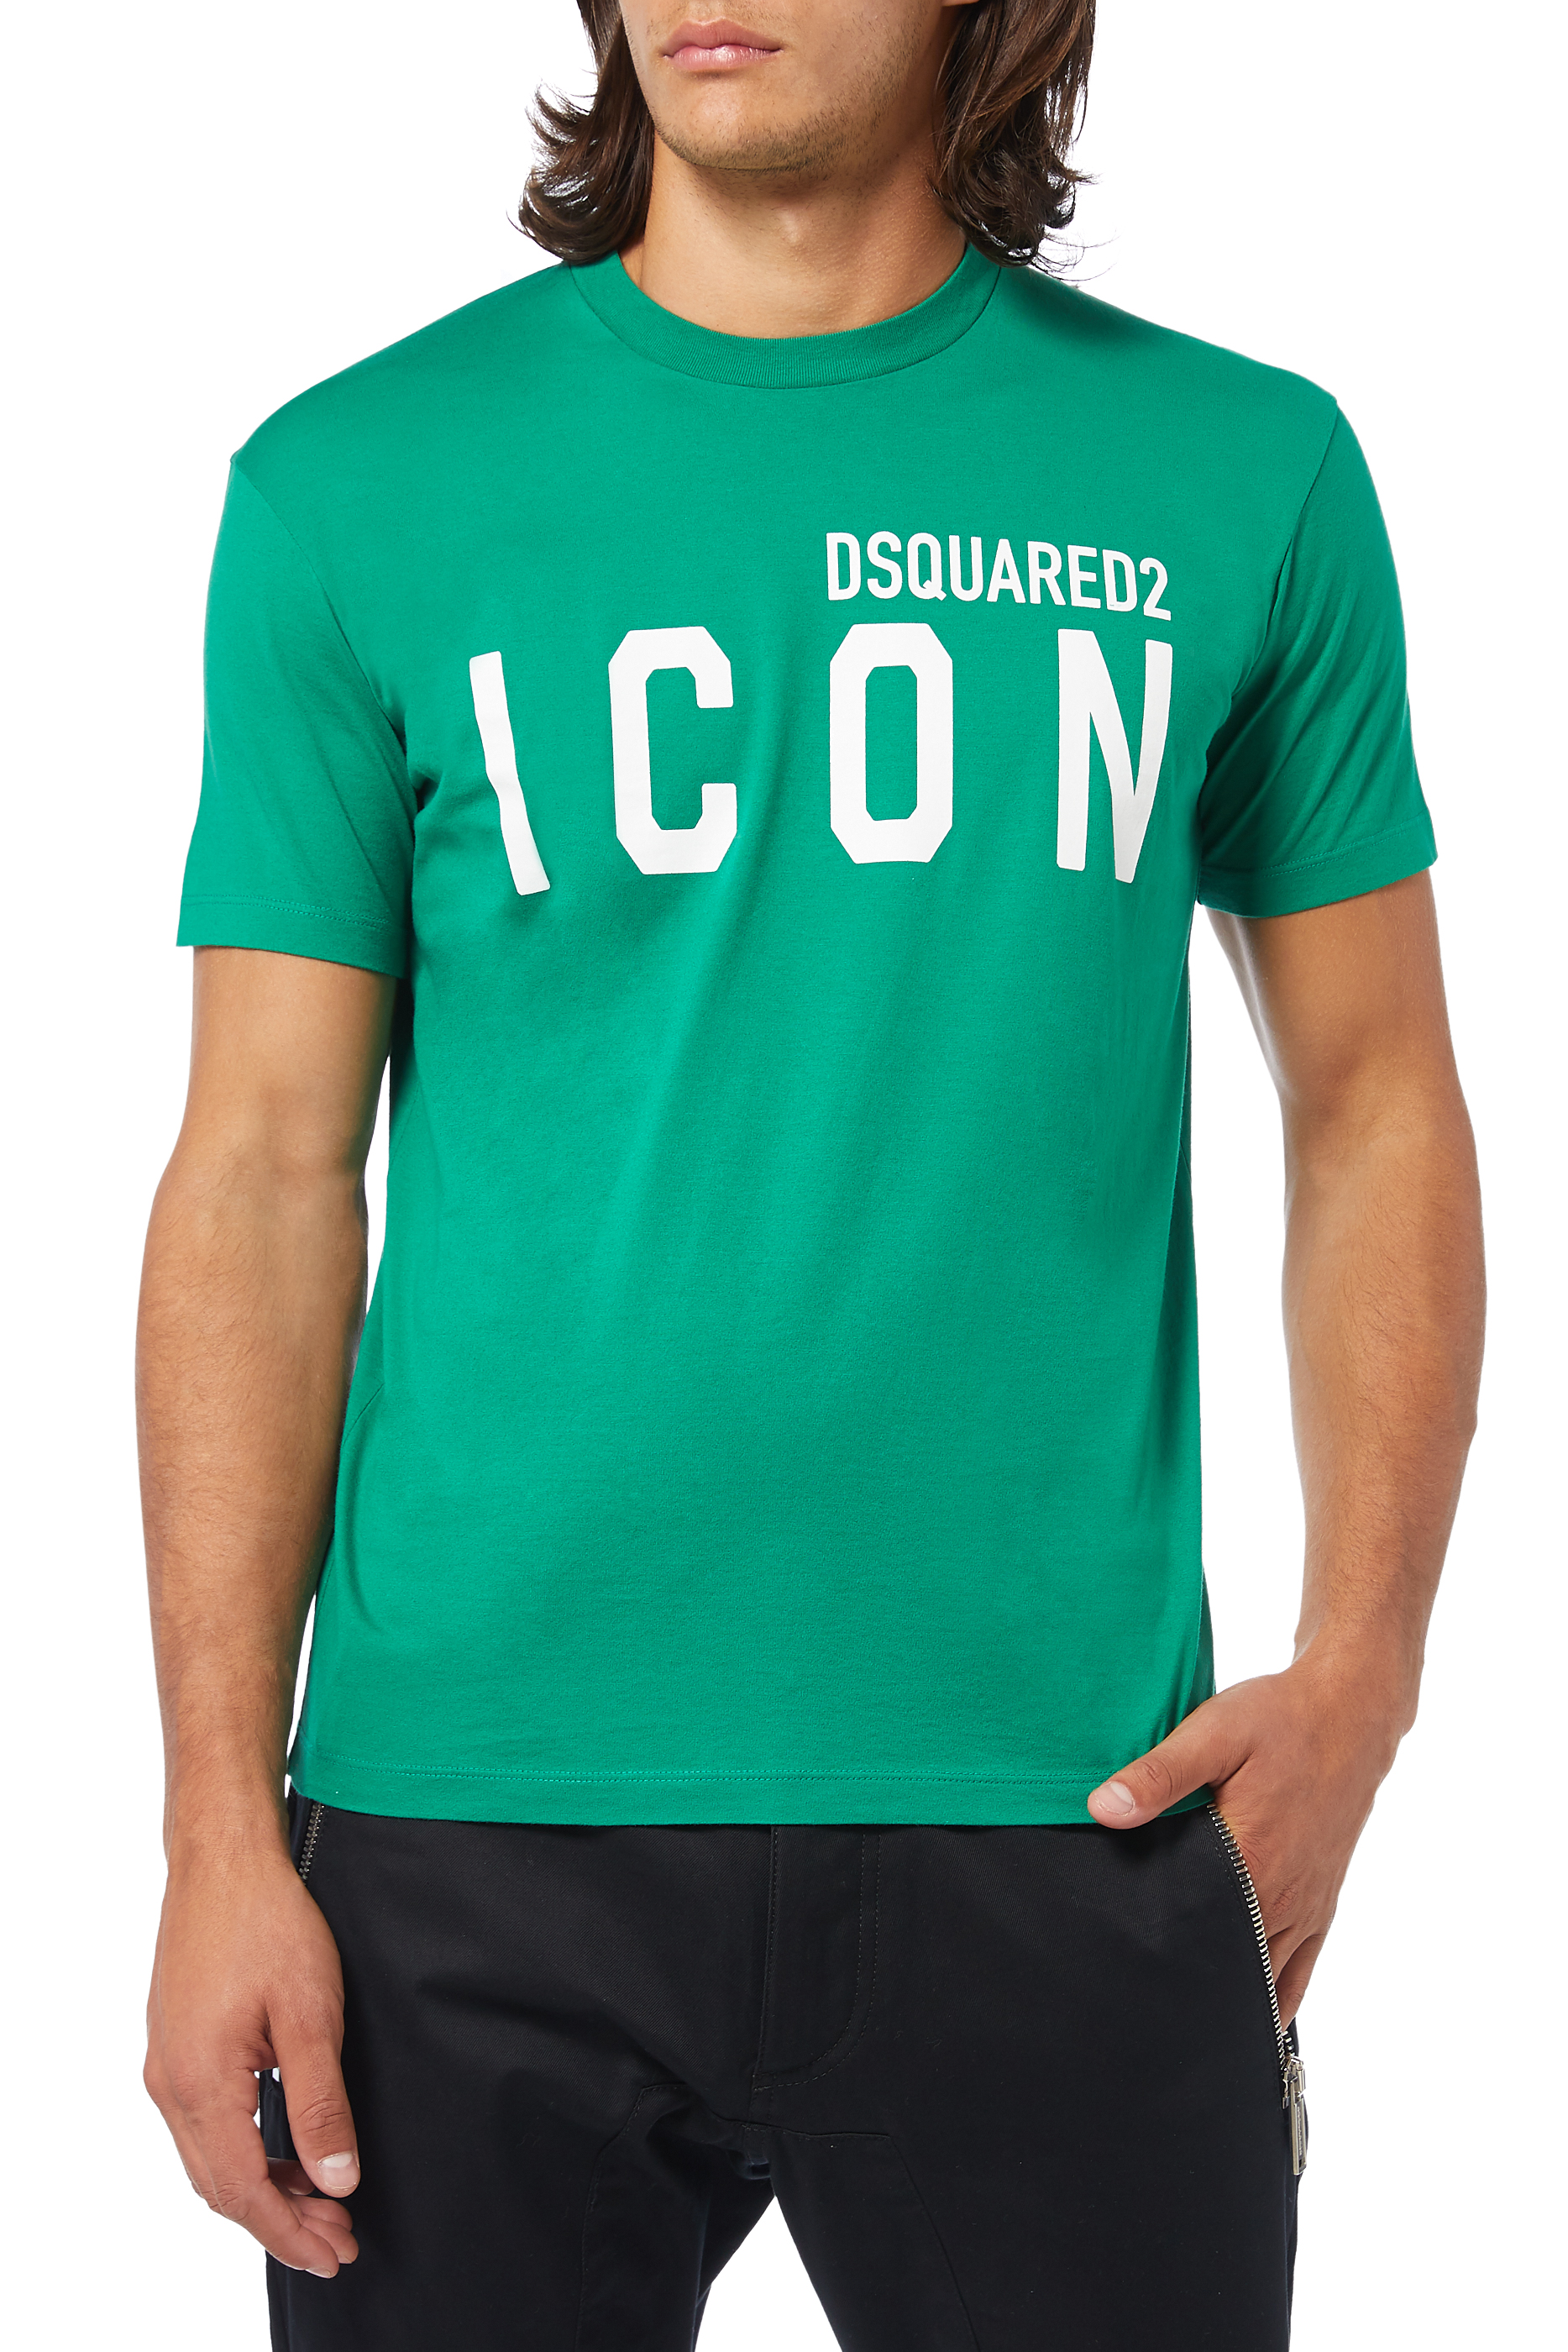 Buy Dsquared2 Icon Print T-Shirt - Mens 